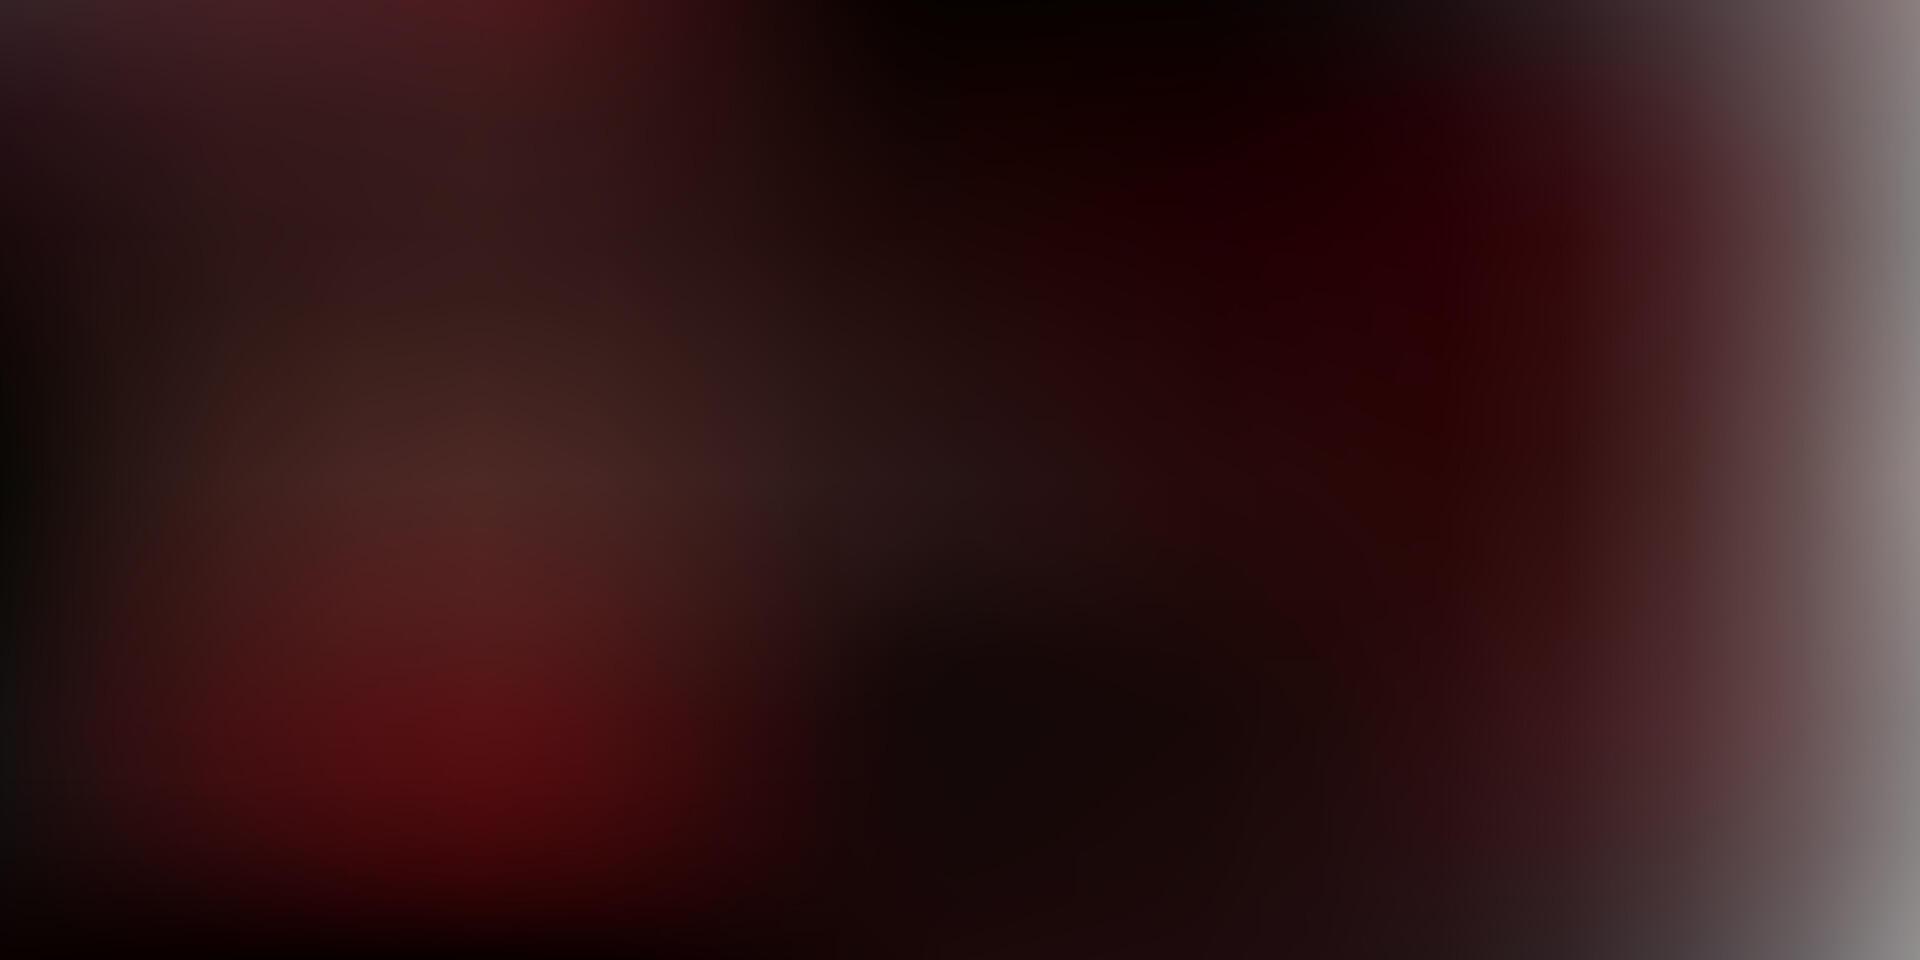 Dark red vector gradient blur backdrop.